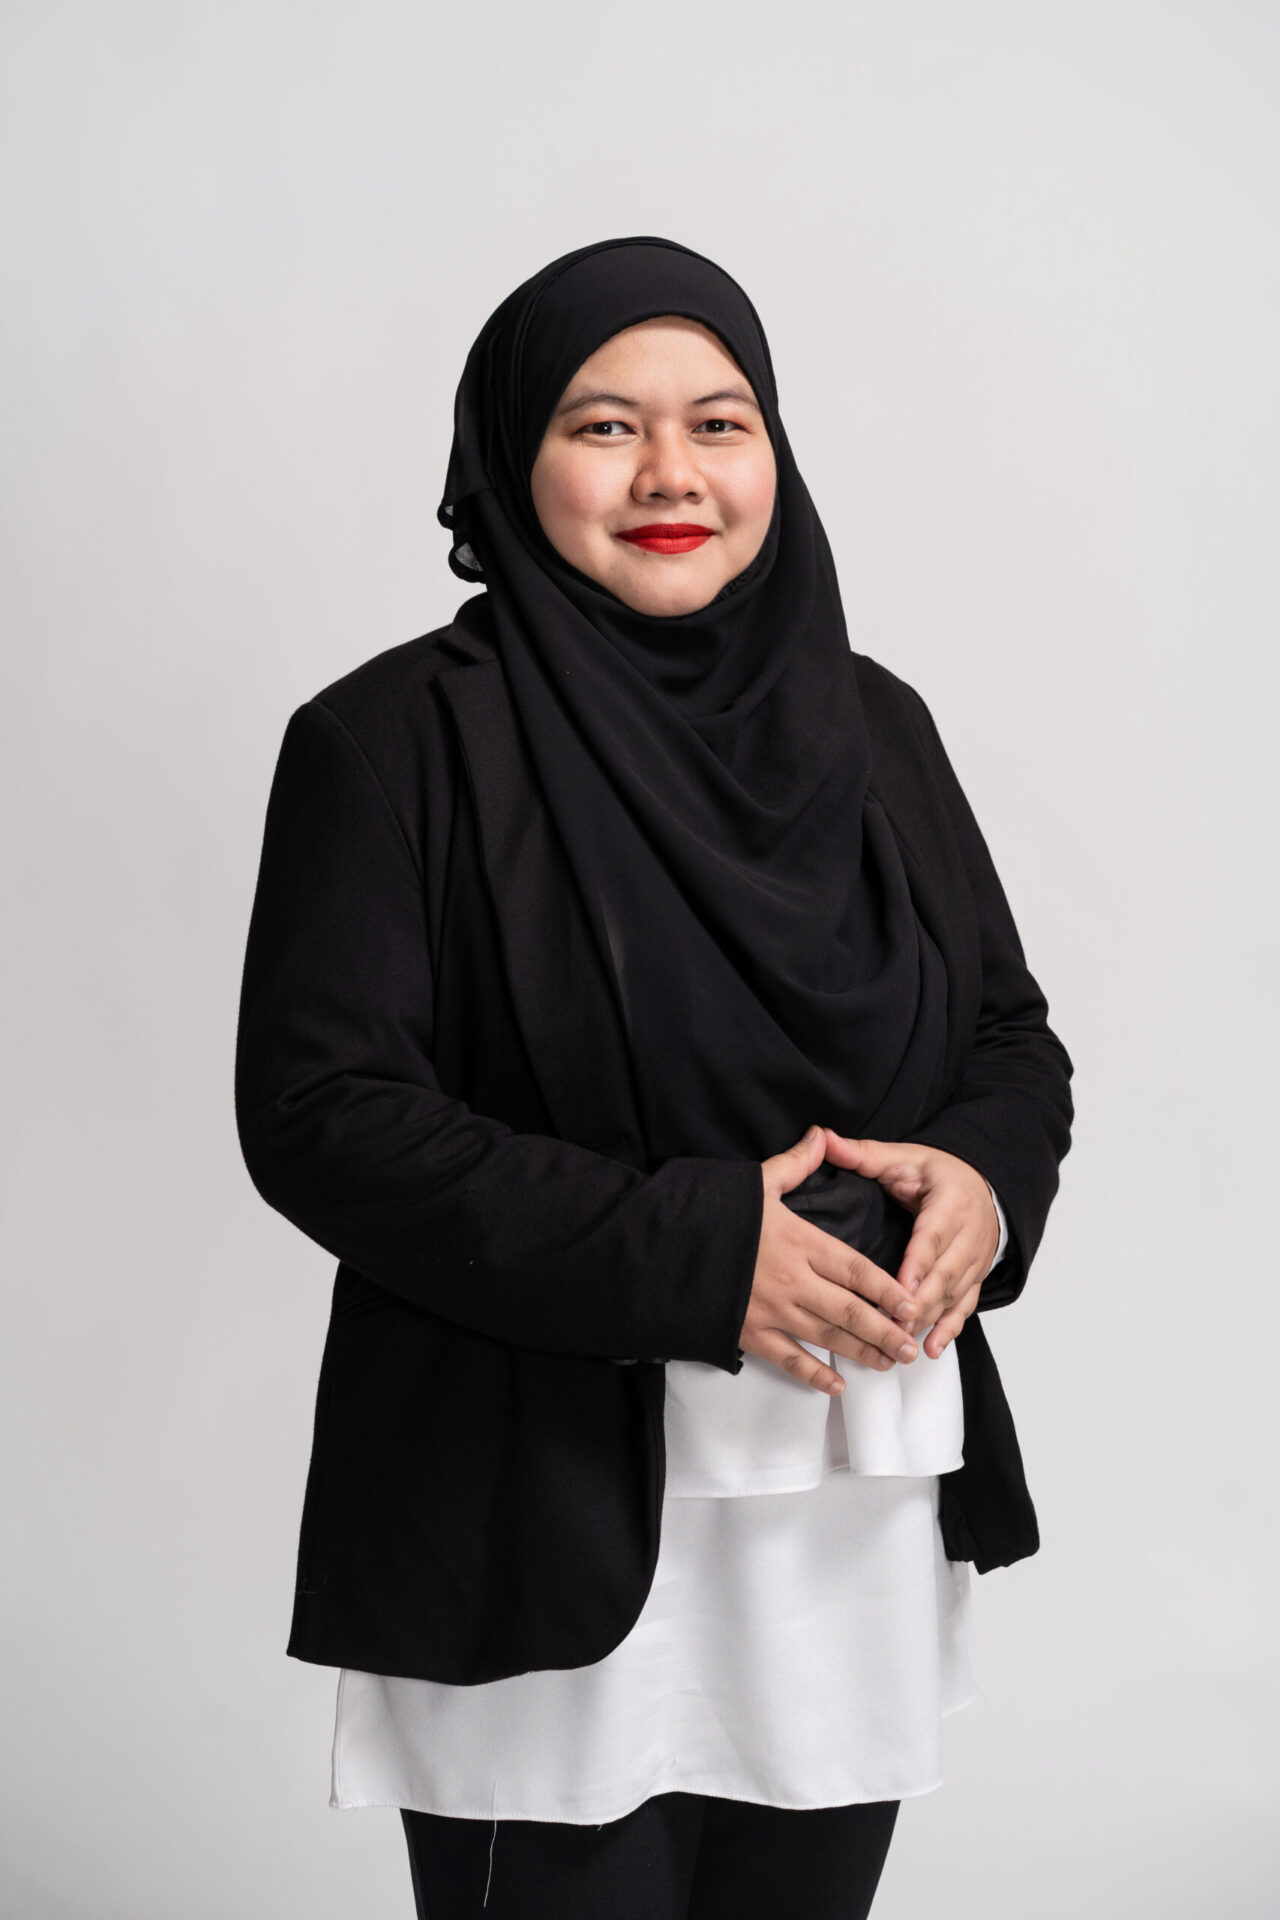 Amira Khairul Anuar